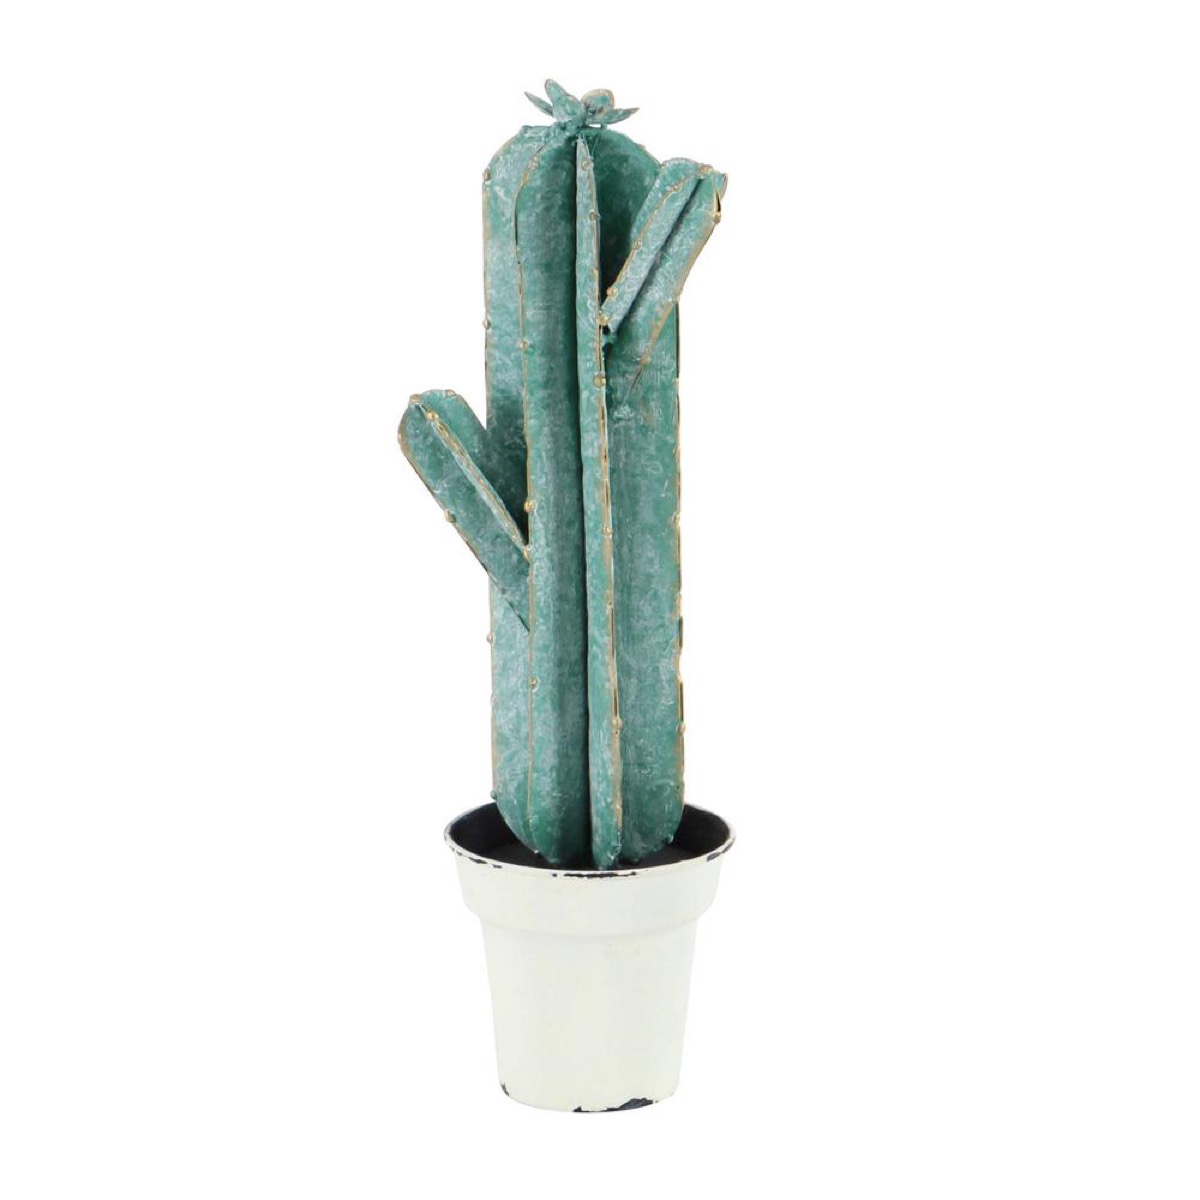 Cactus Sculpture in a Pot Home Depot